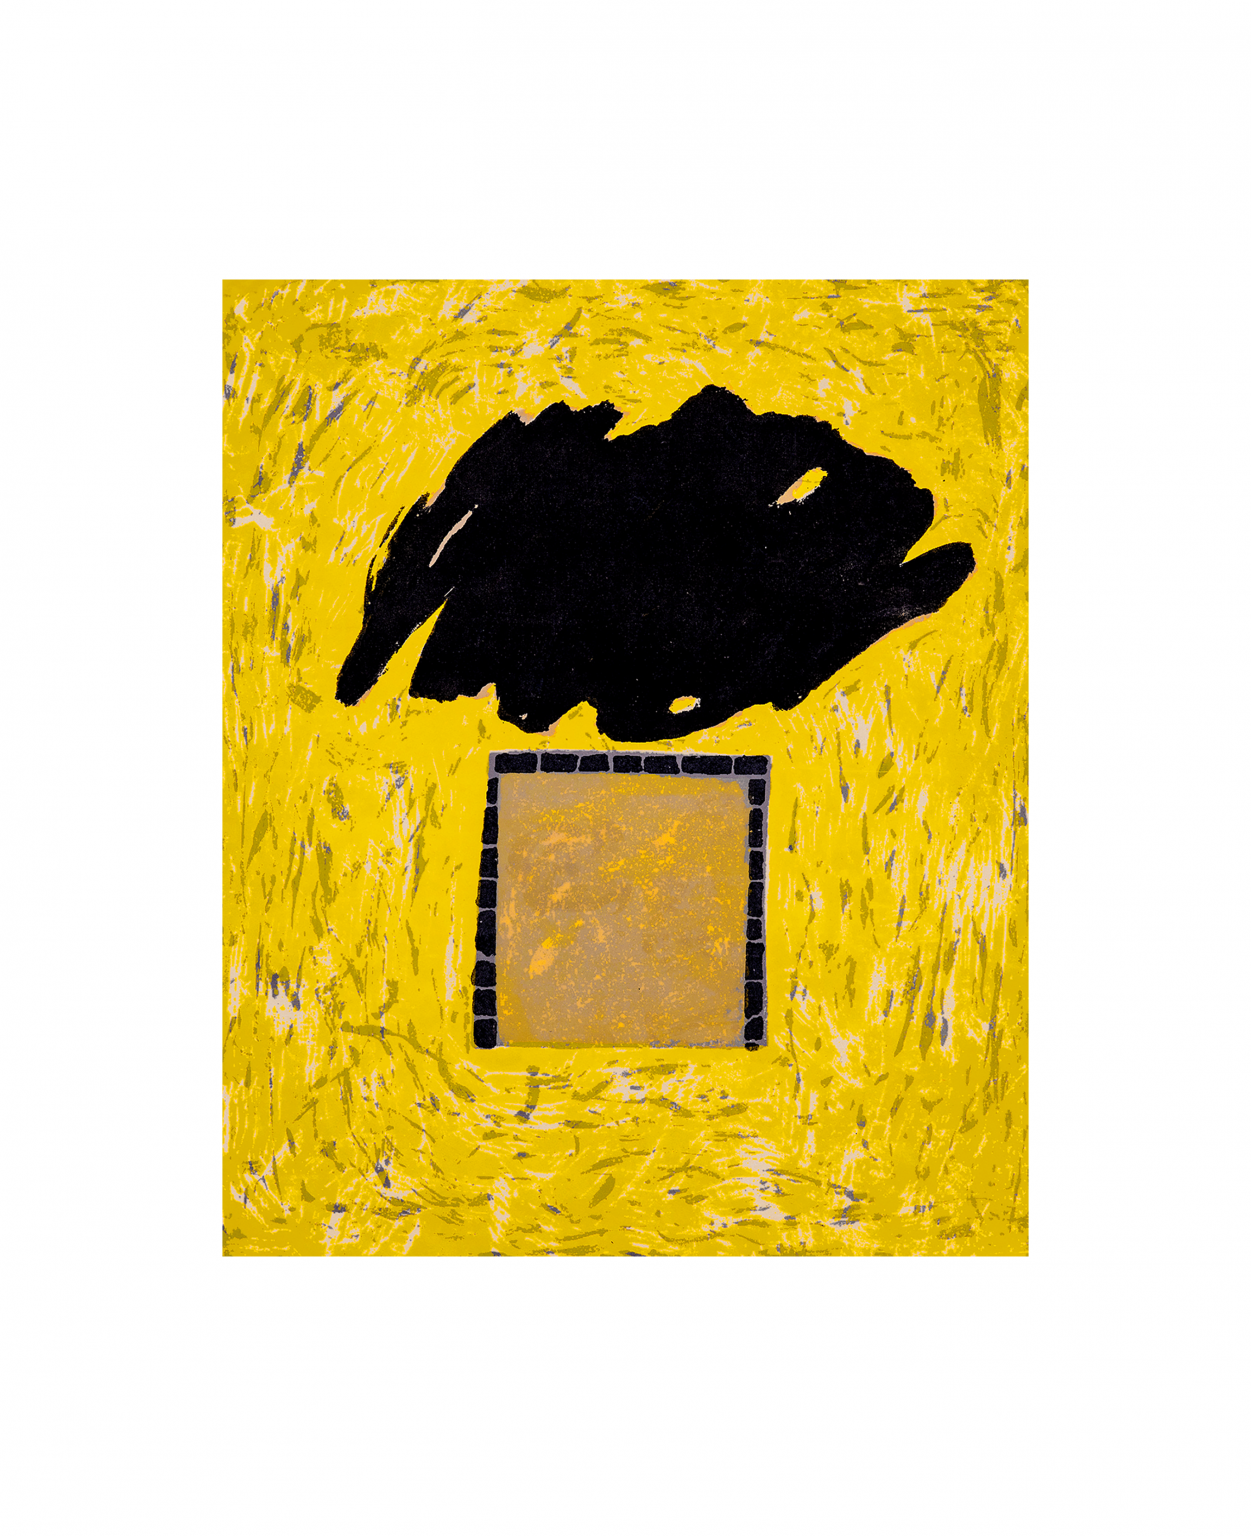 Yellow Abstract Art Print